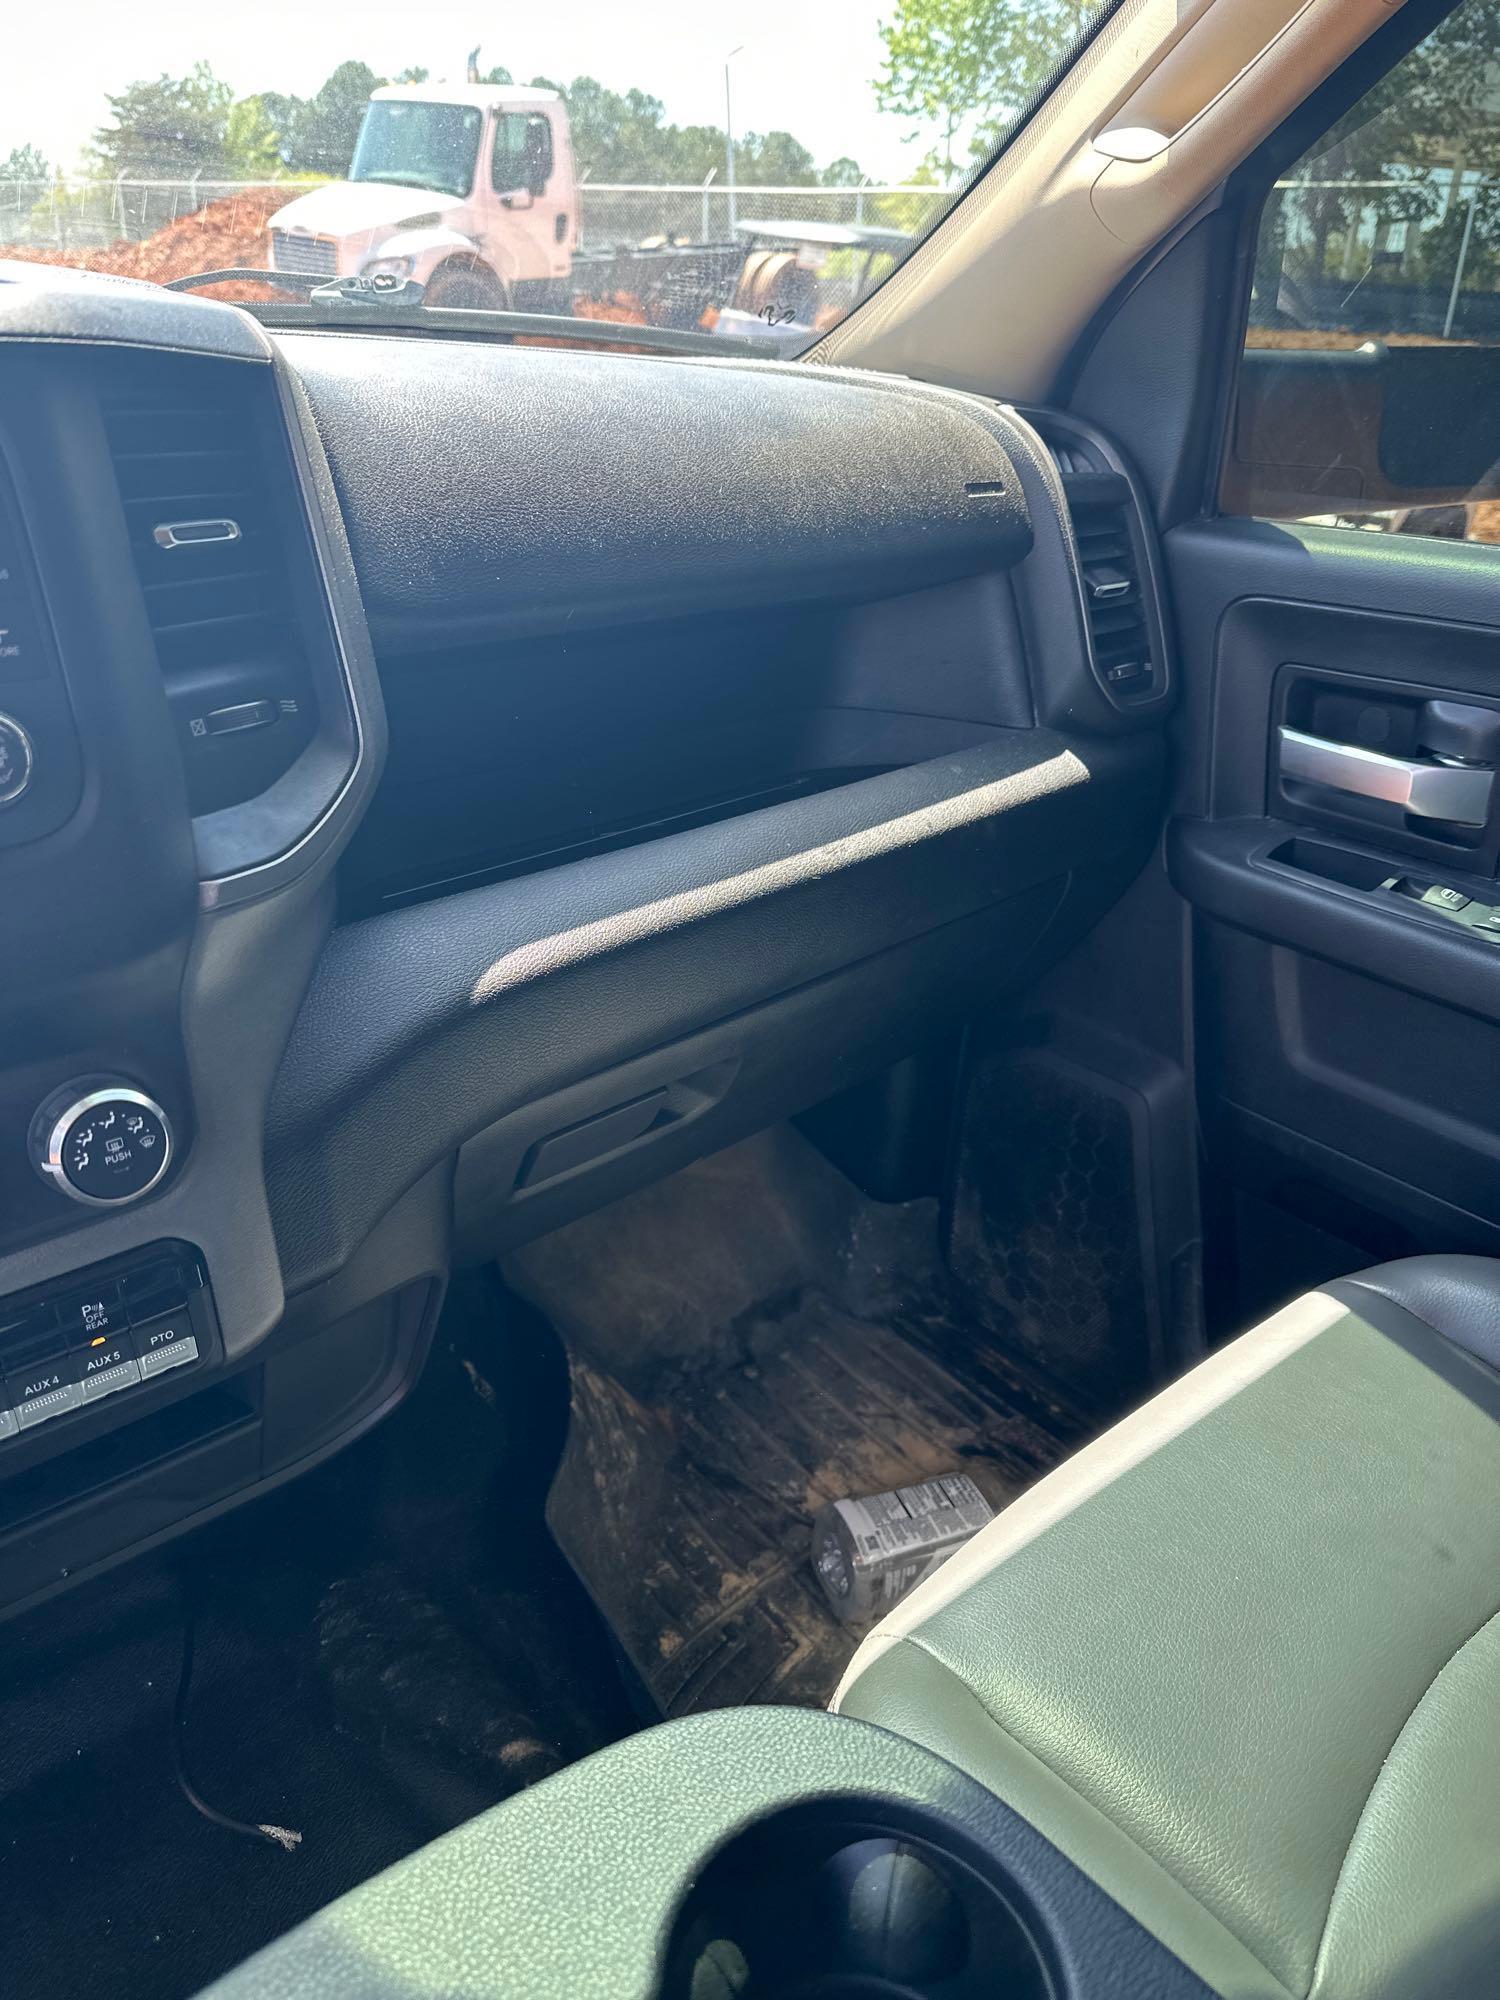 2019 DODGE RAM 3500 S/A CREW CAB SERVICE BODY TRUCK